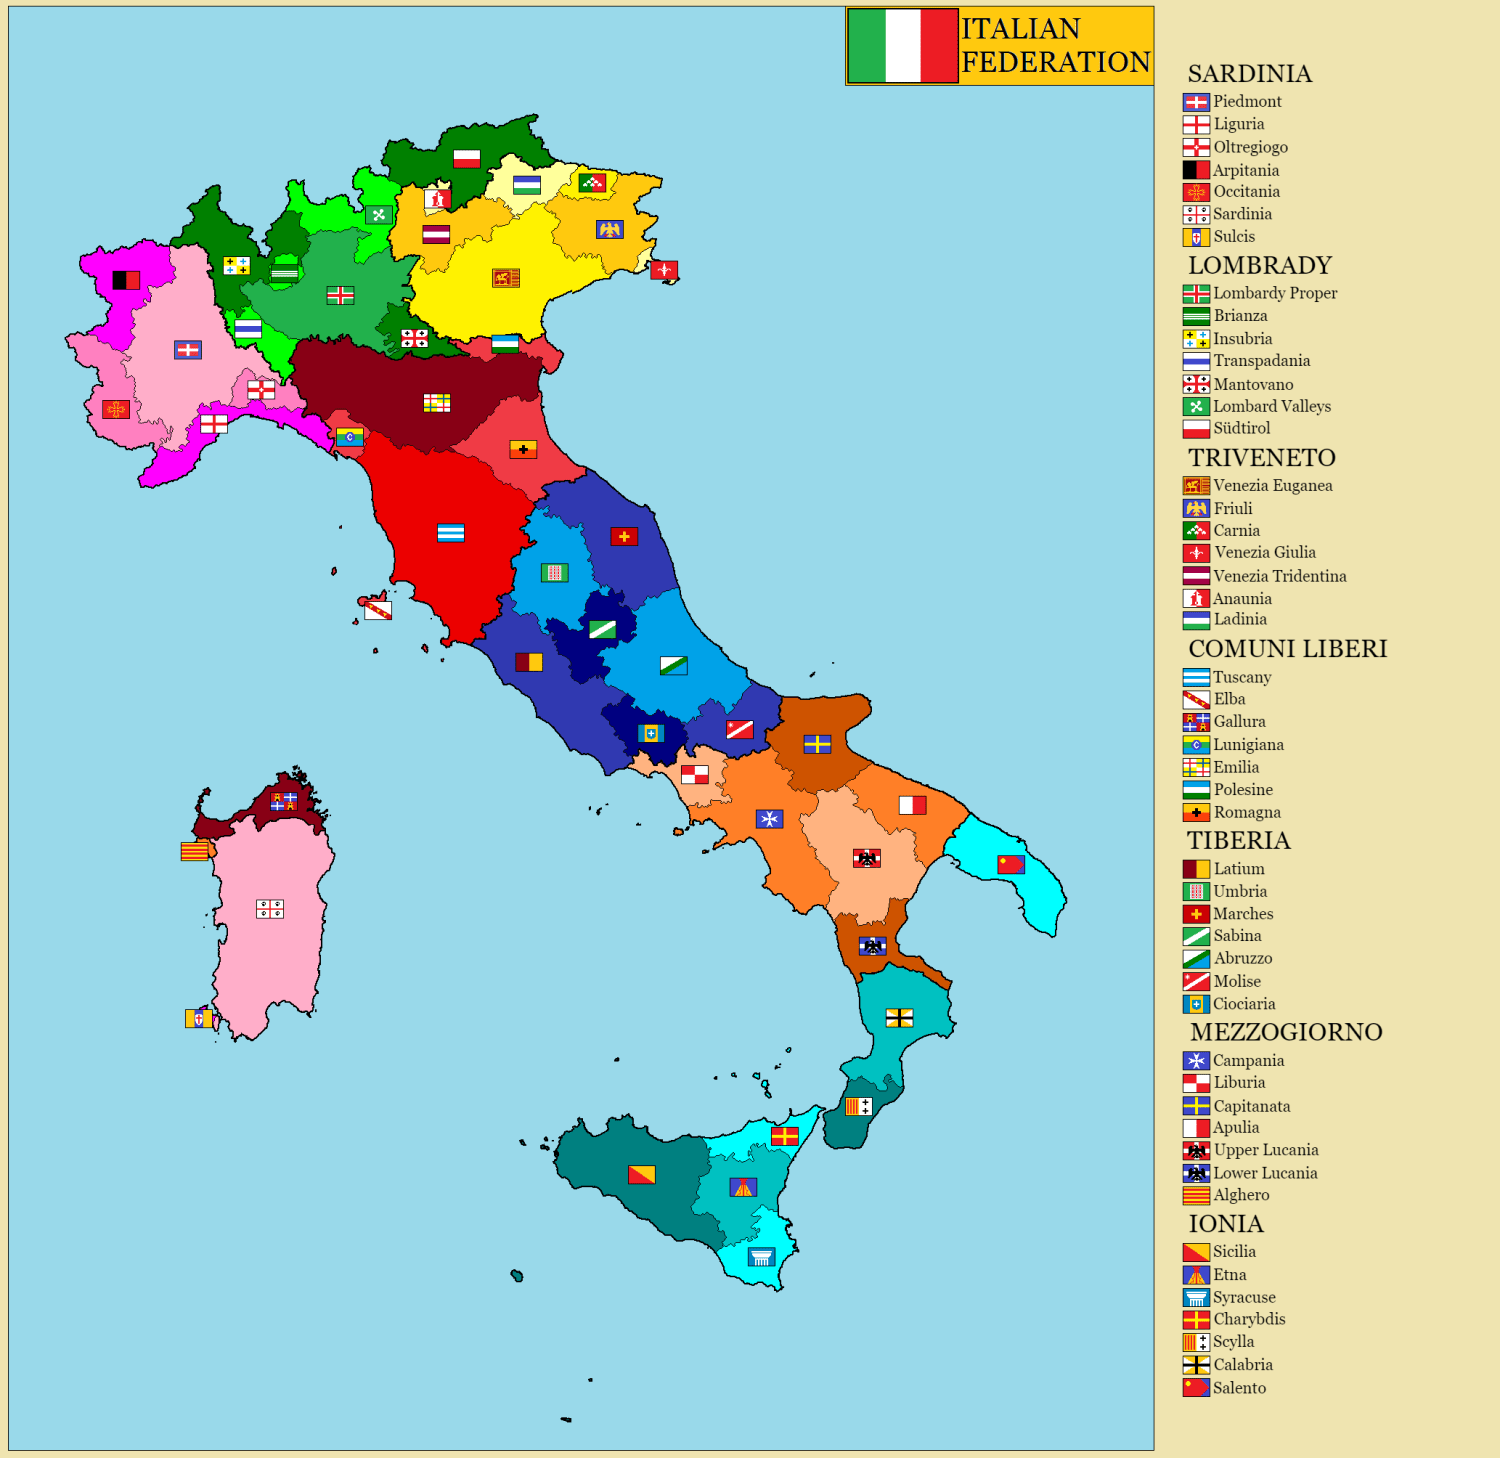 The Italian Federation